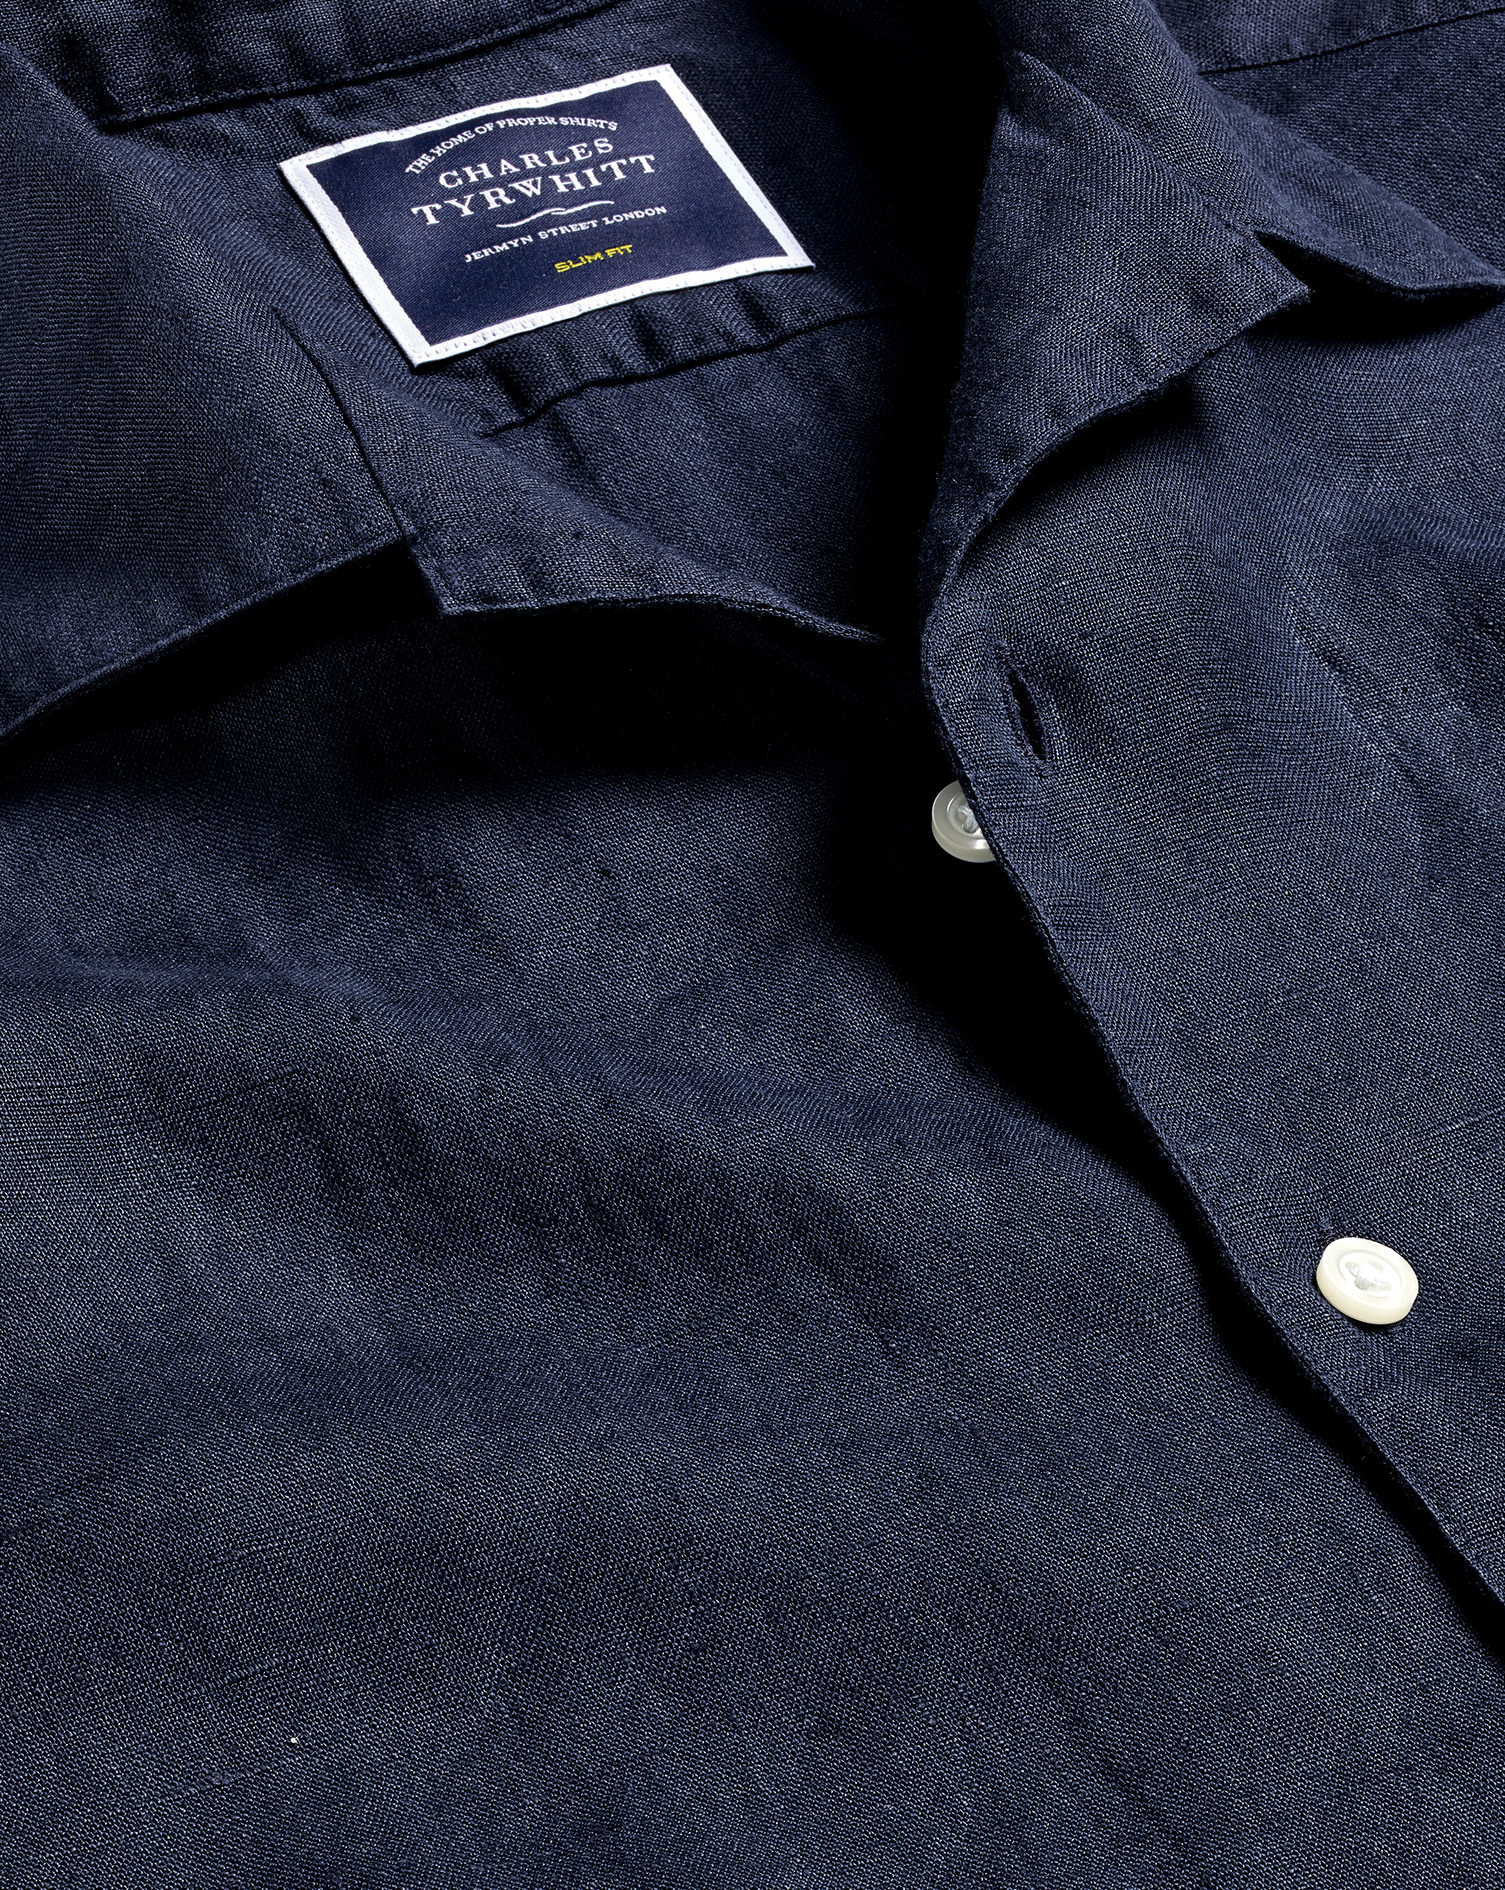 Men's Charles Tyrwhitt Revere Collar Pure Short Sleeve Casual Shirt - Navy Blue Single Cuff Size Med